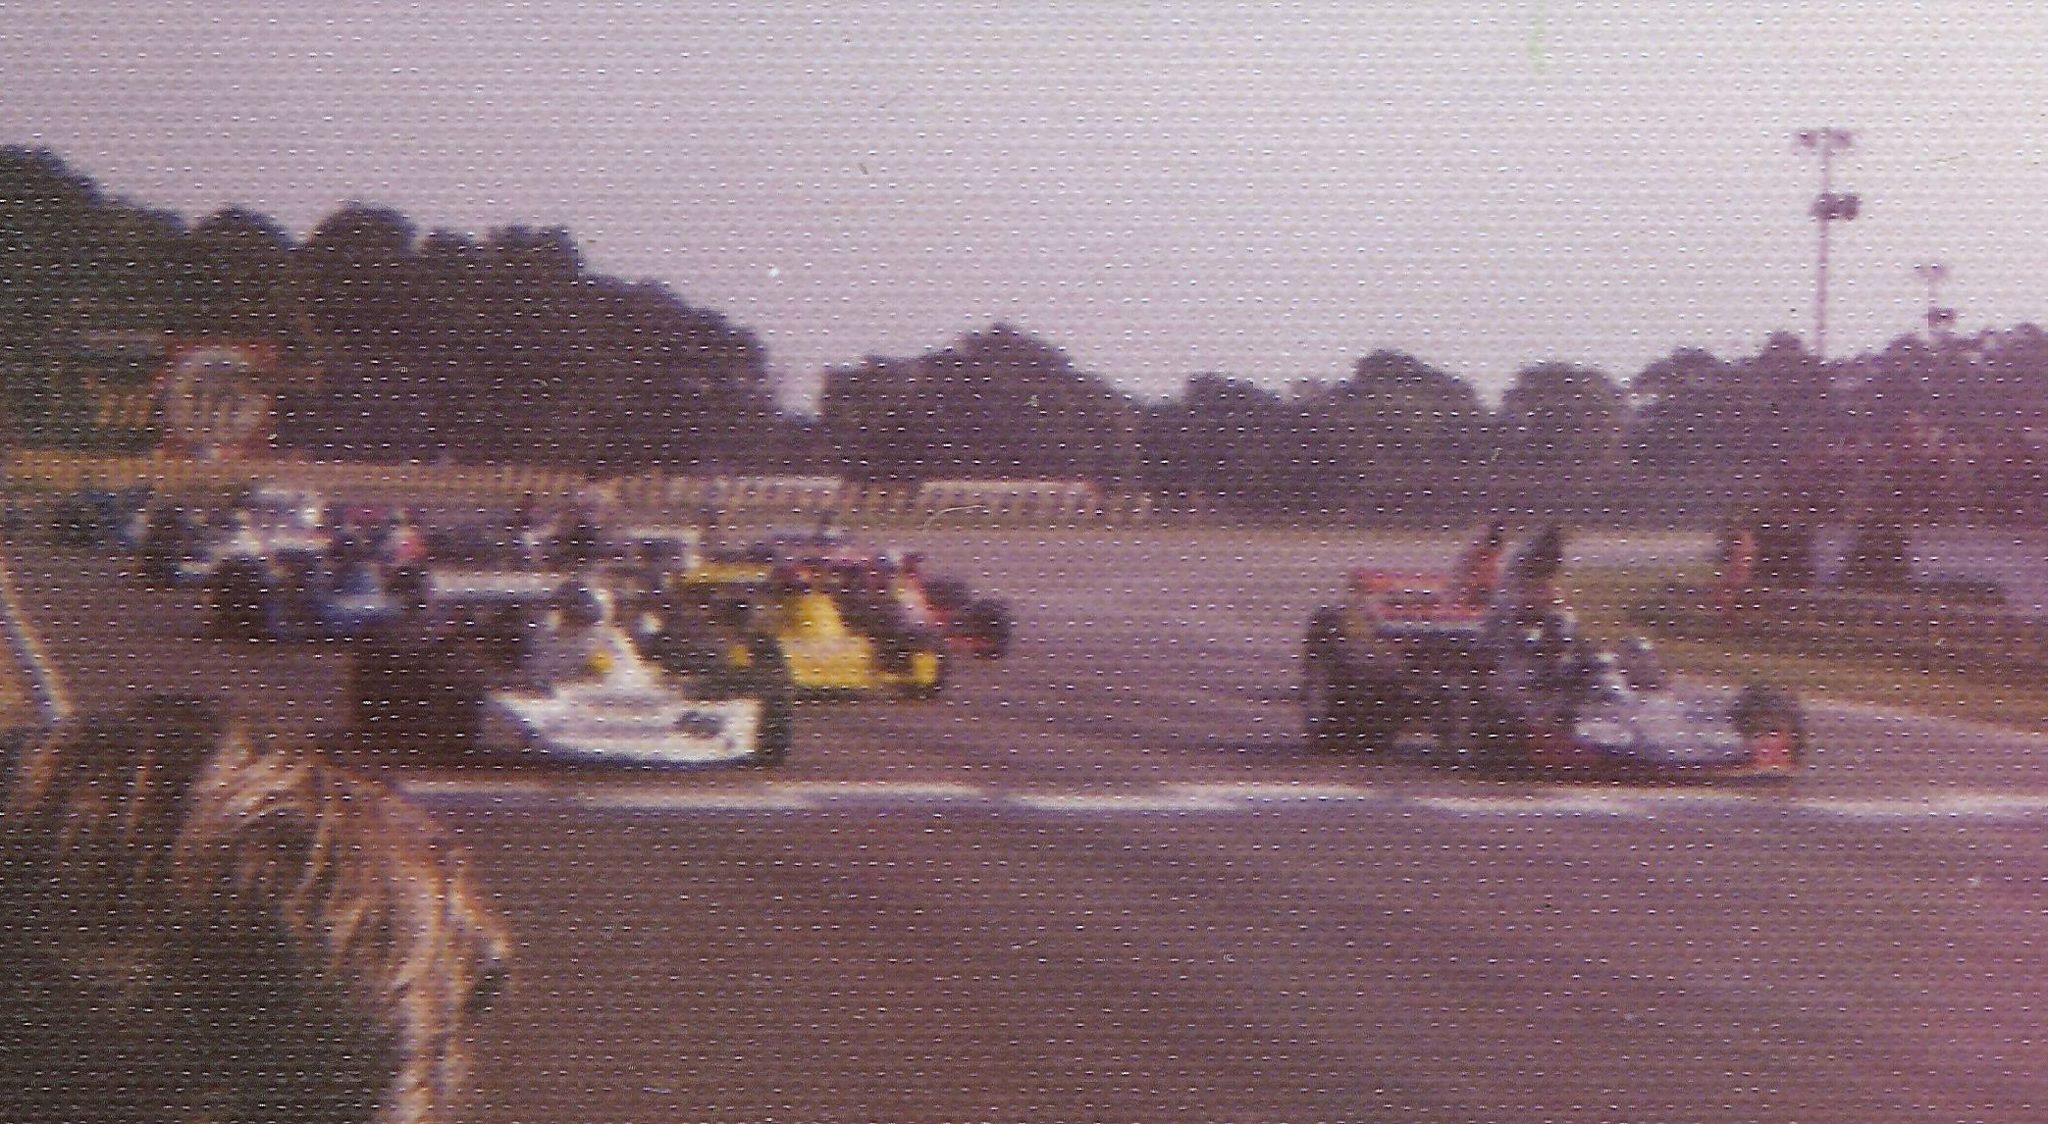 La F1 Mecánica Argentina, año 1976